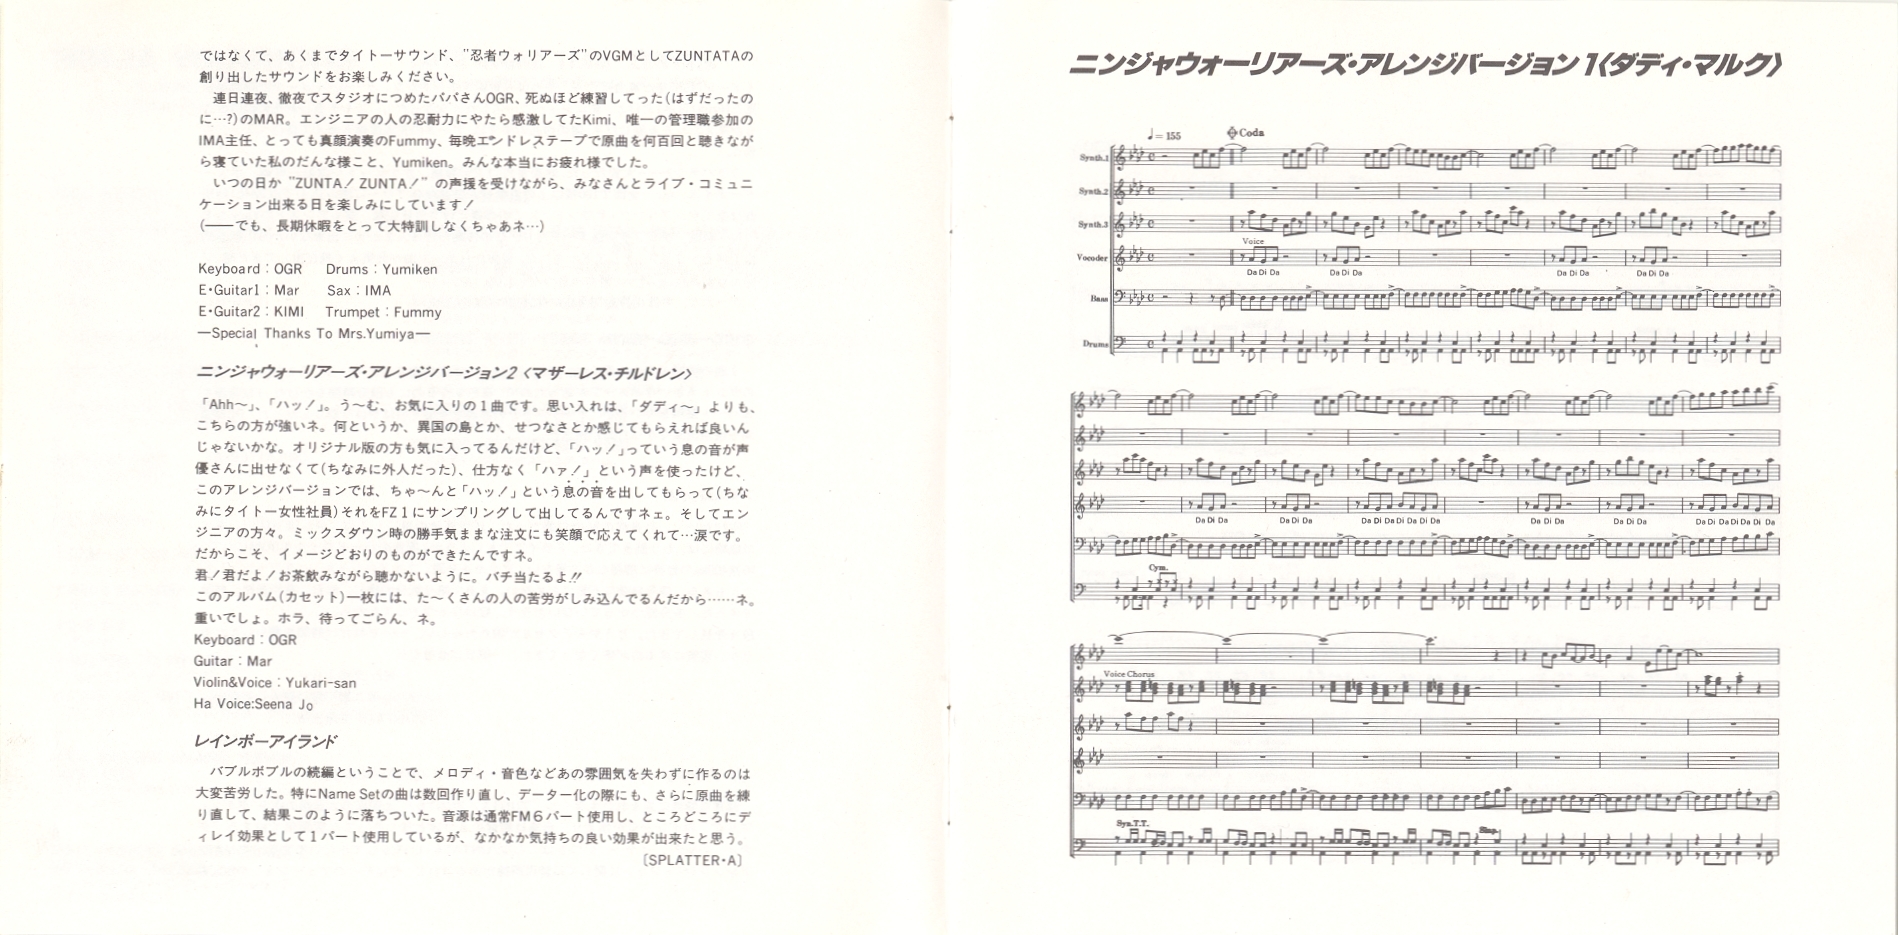 NINJA WARRIORS -G.S.M. TAITO 1- (1988) MP3 - Download NINJA 